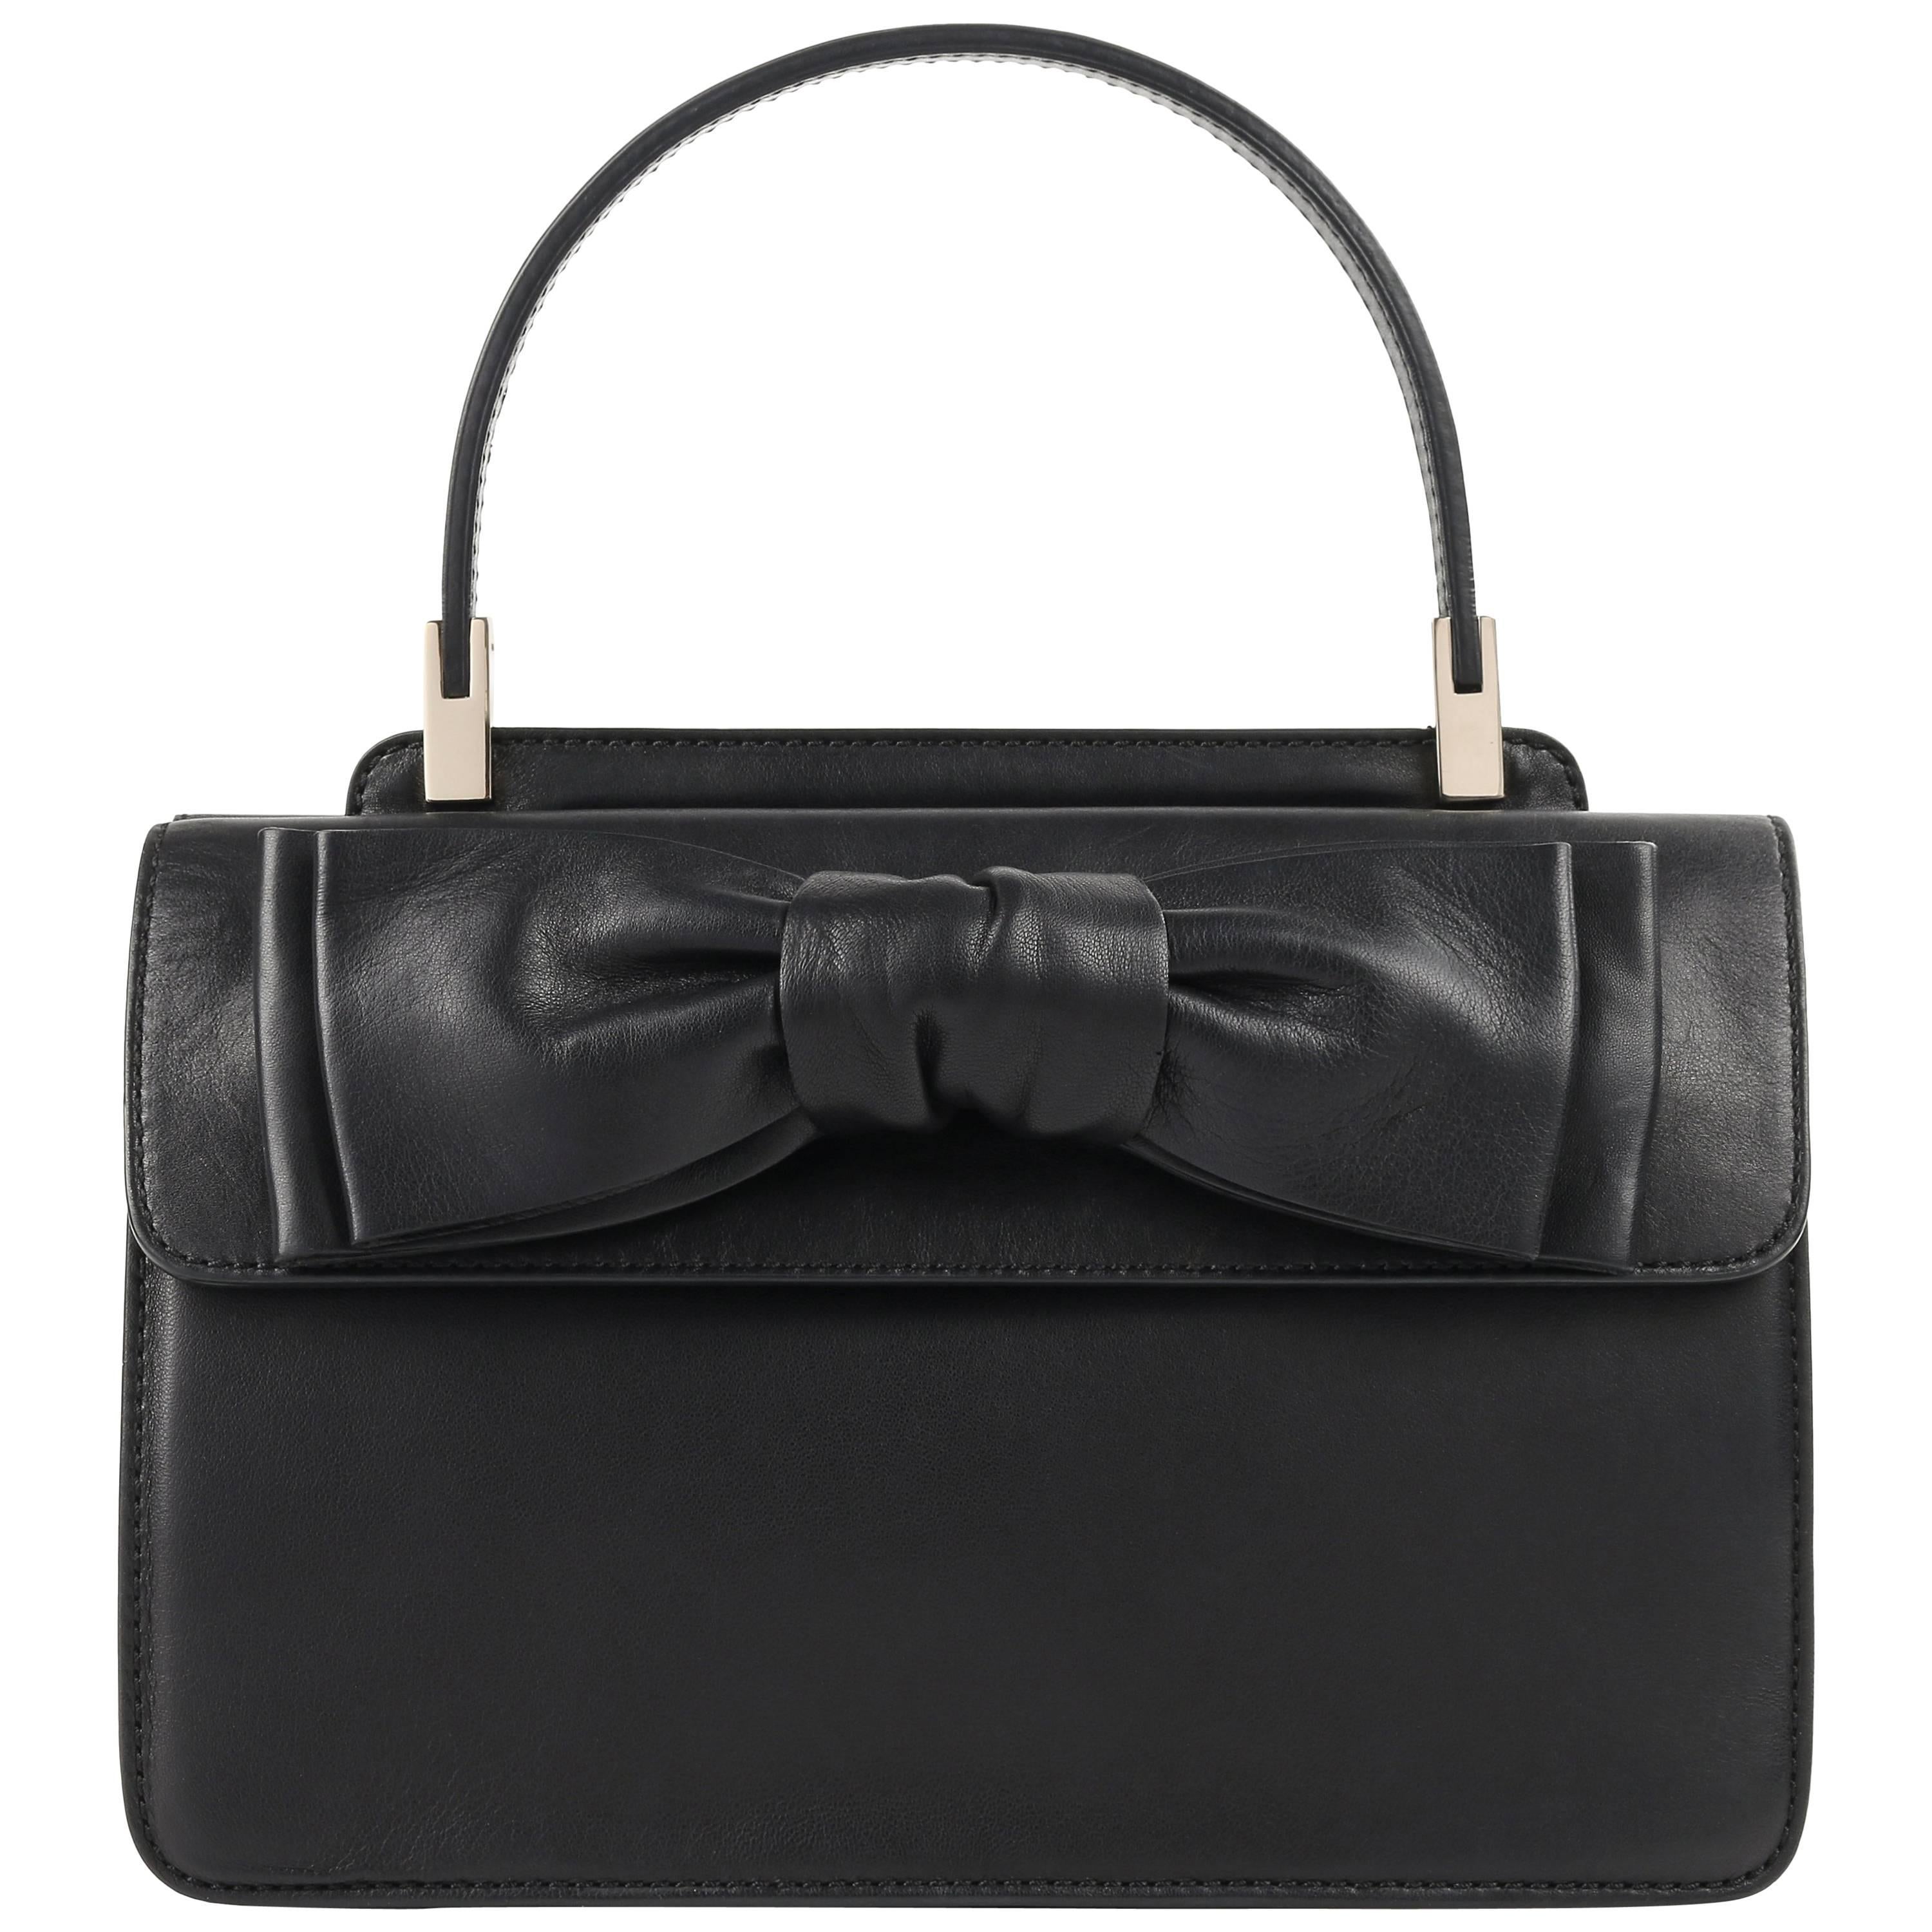 VALENTINO Garavani A/W 2011 "Aphrodite Small" Black Leather Bow Detail Handbag 